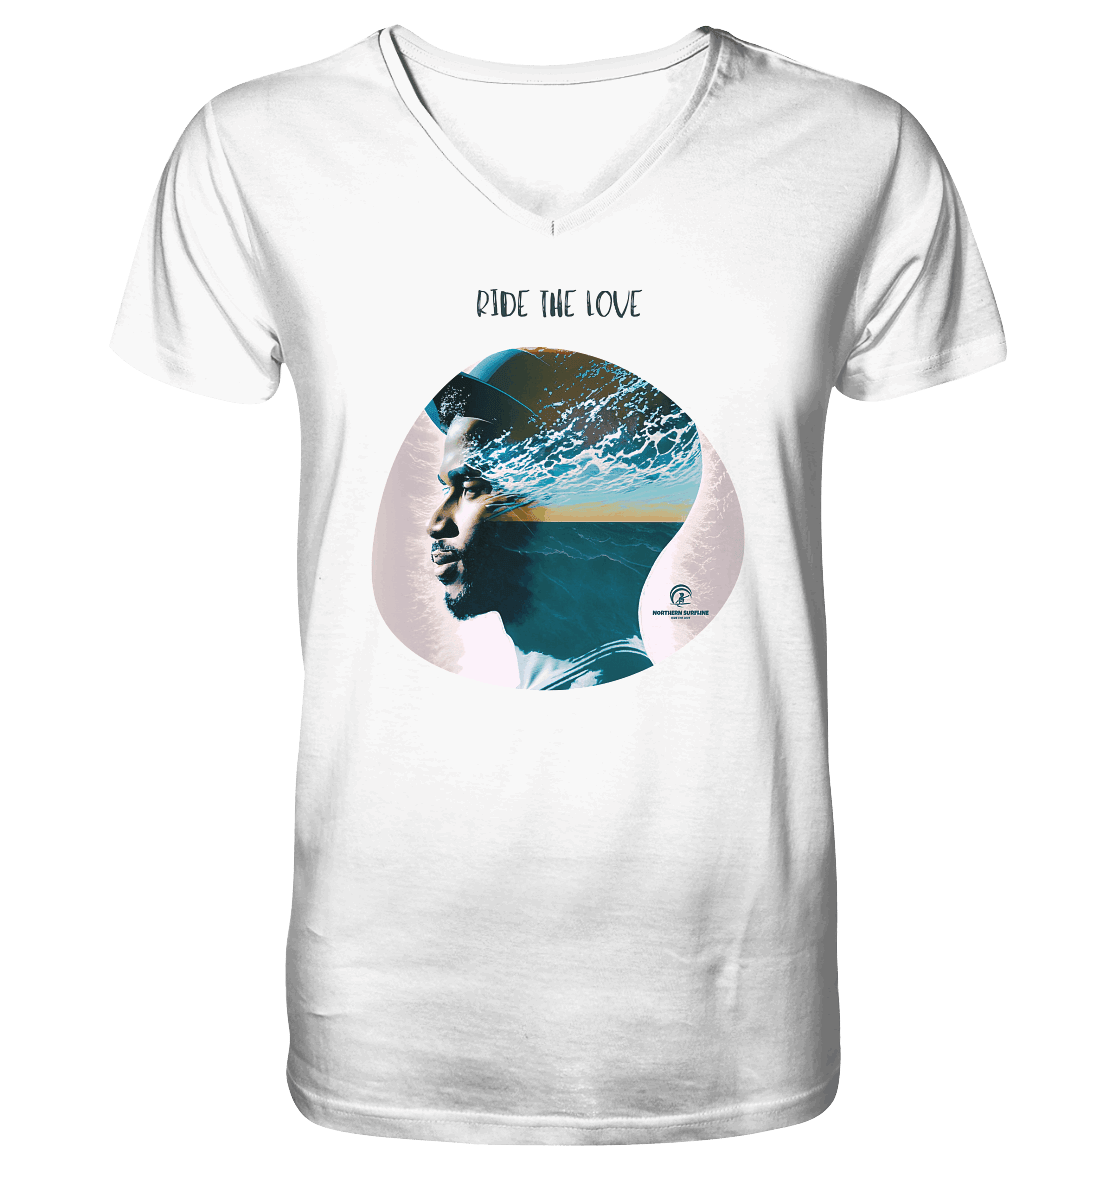 Northern Sufline - Mens Organic V-Neck Shirt